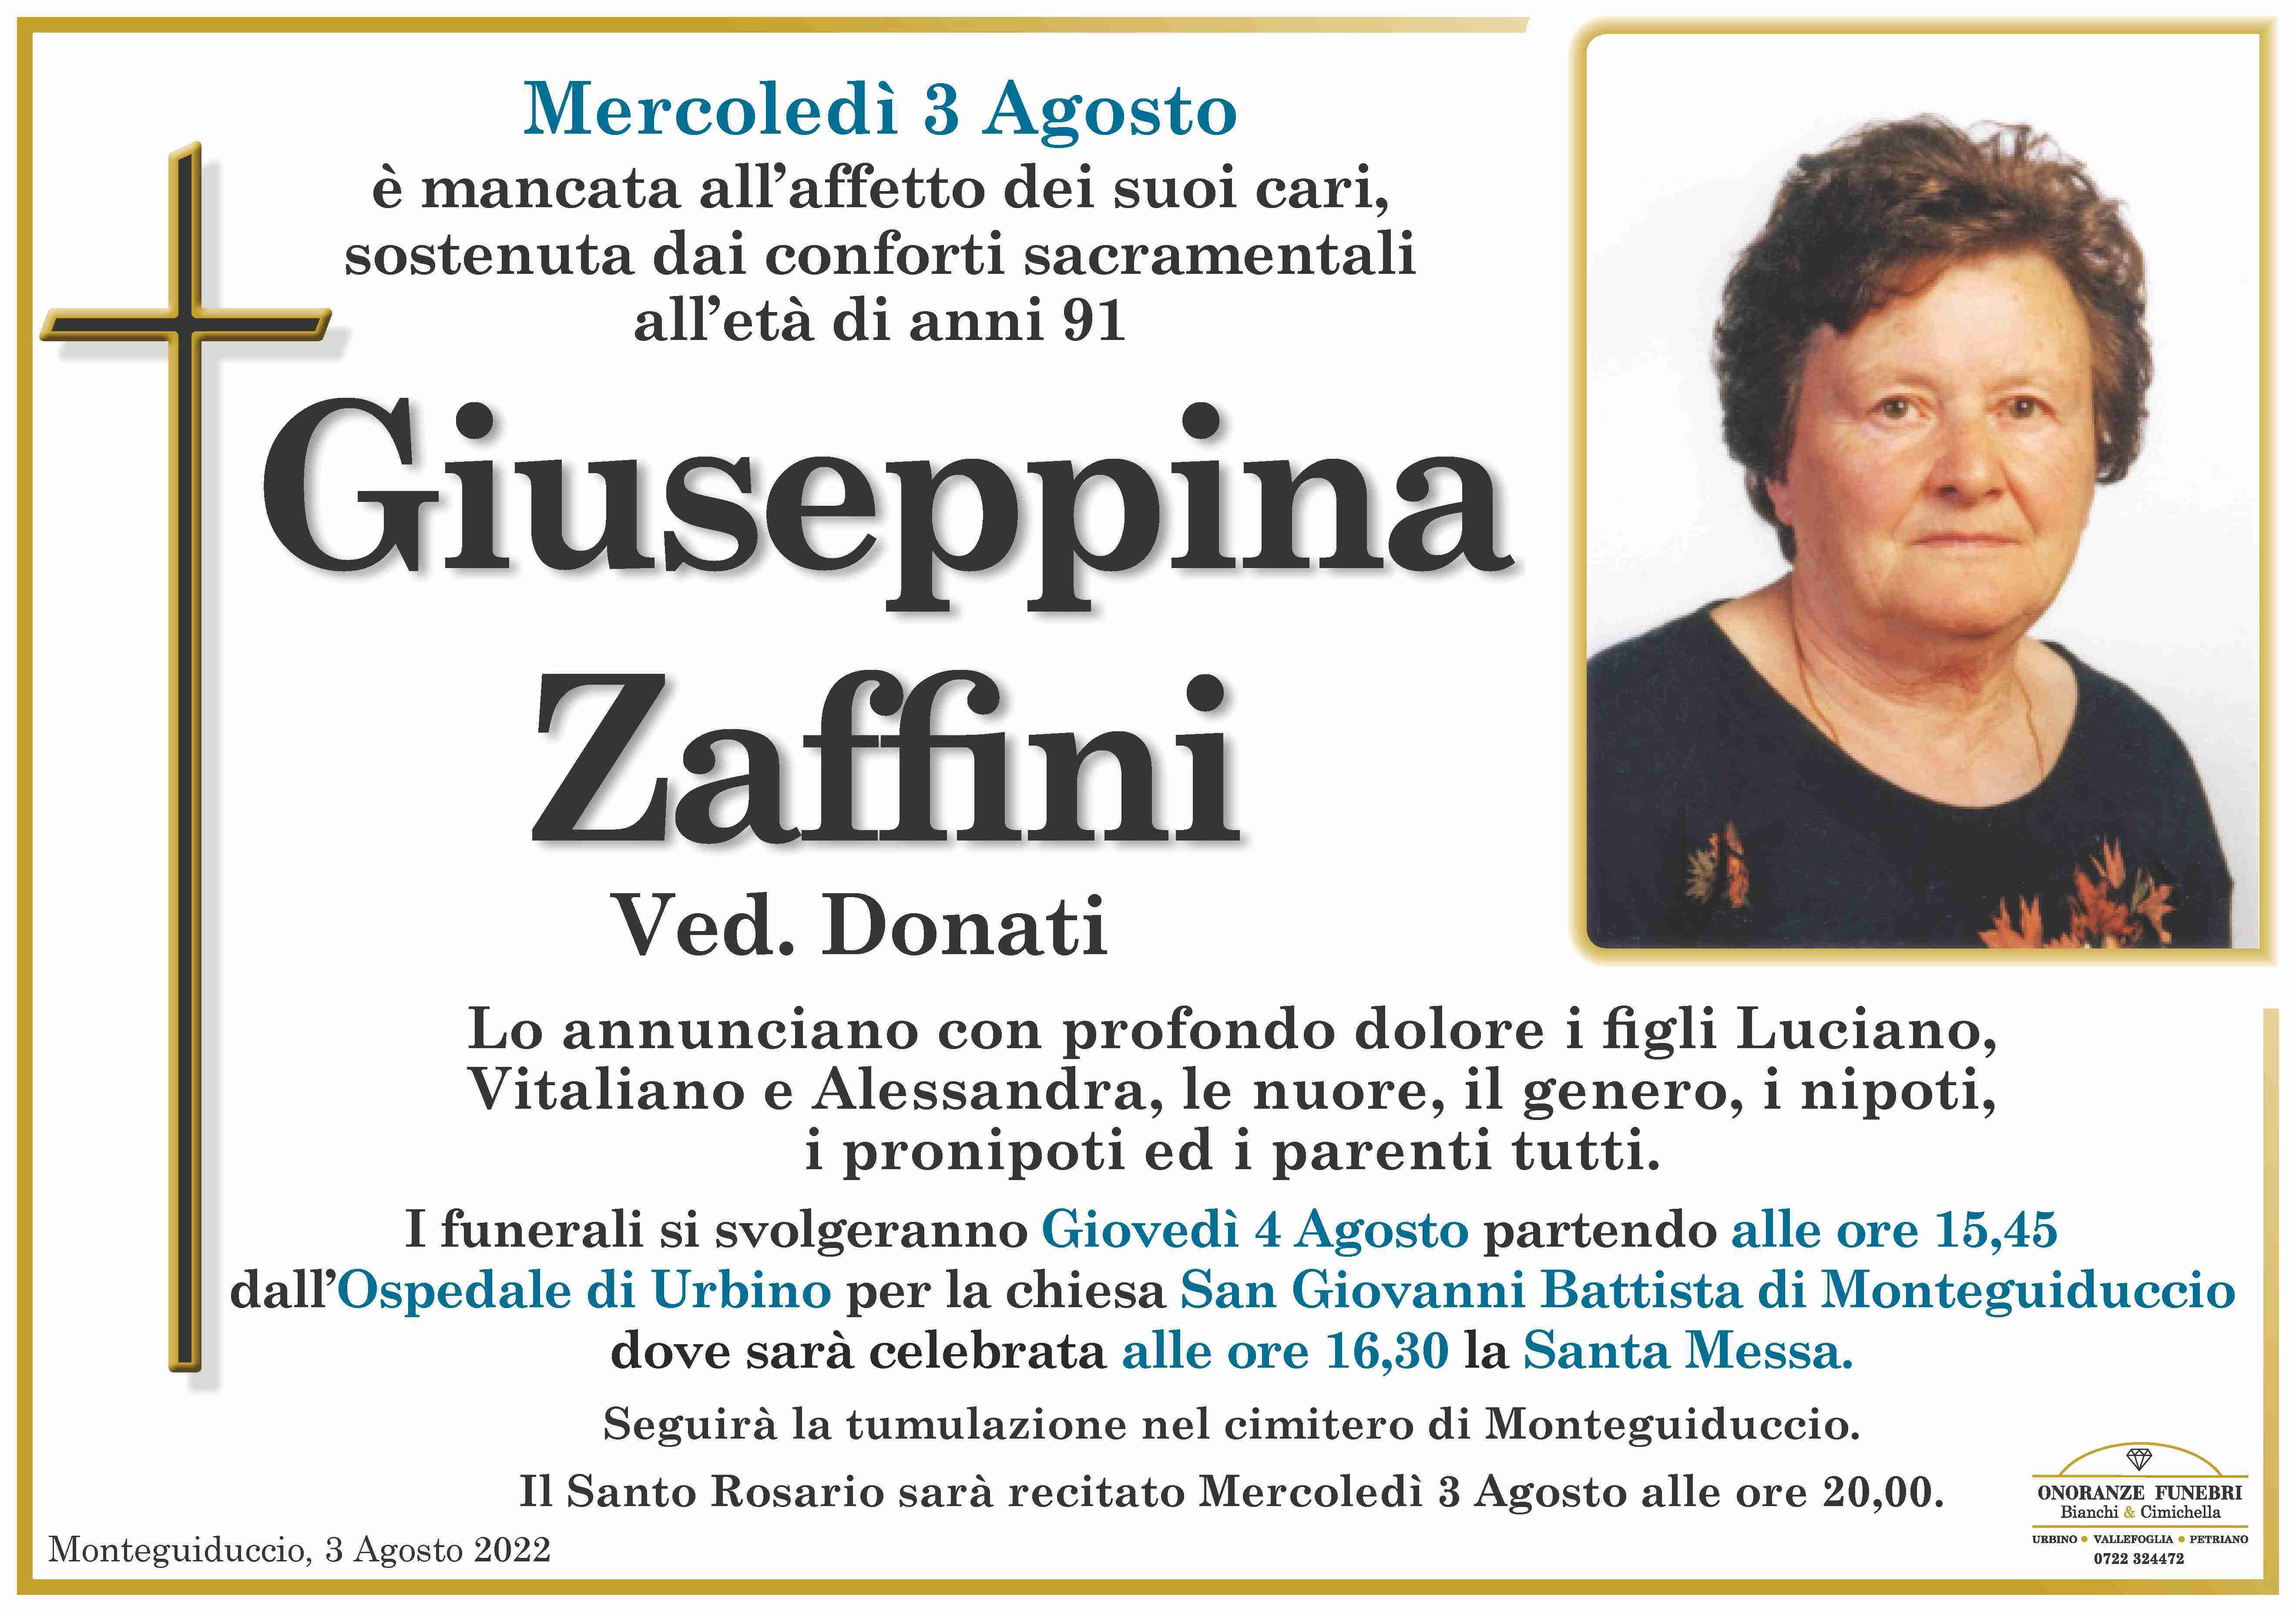 Giuseppina Zaffini